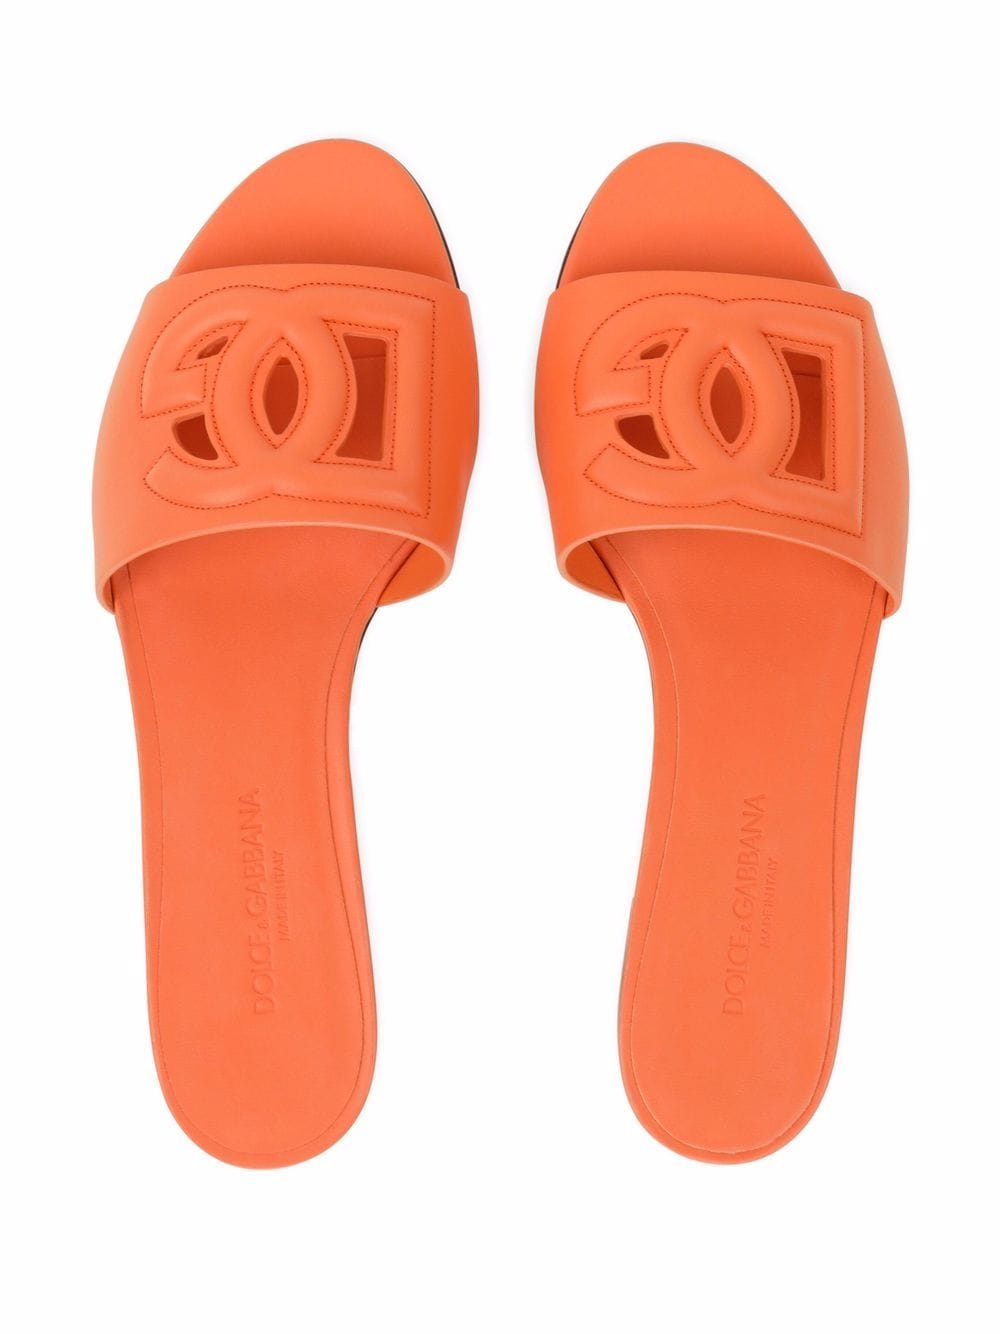 Sandali in pelle arancione con logo DG<br><br><br>